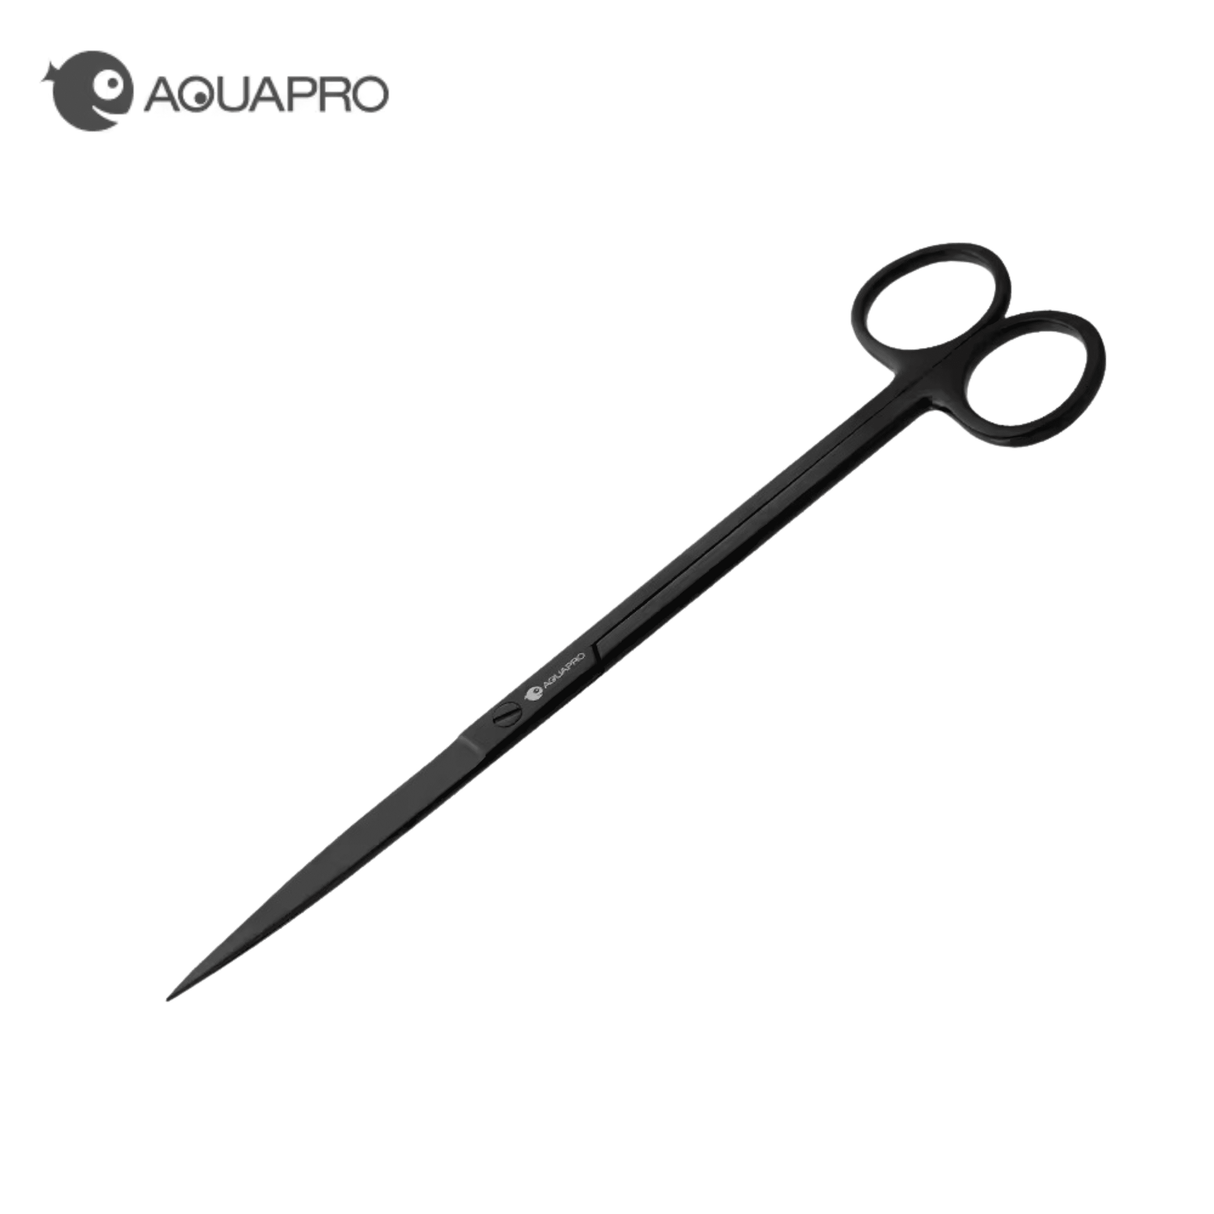 Aquapro Pro Scissors Black - Straight